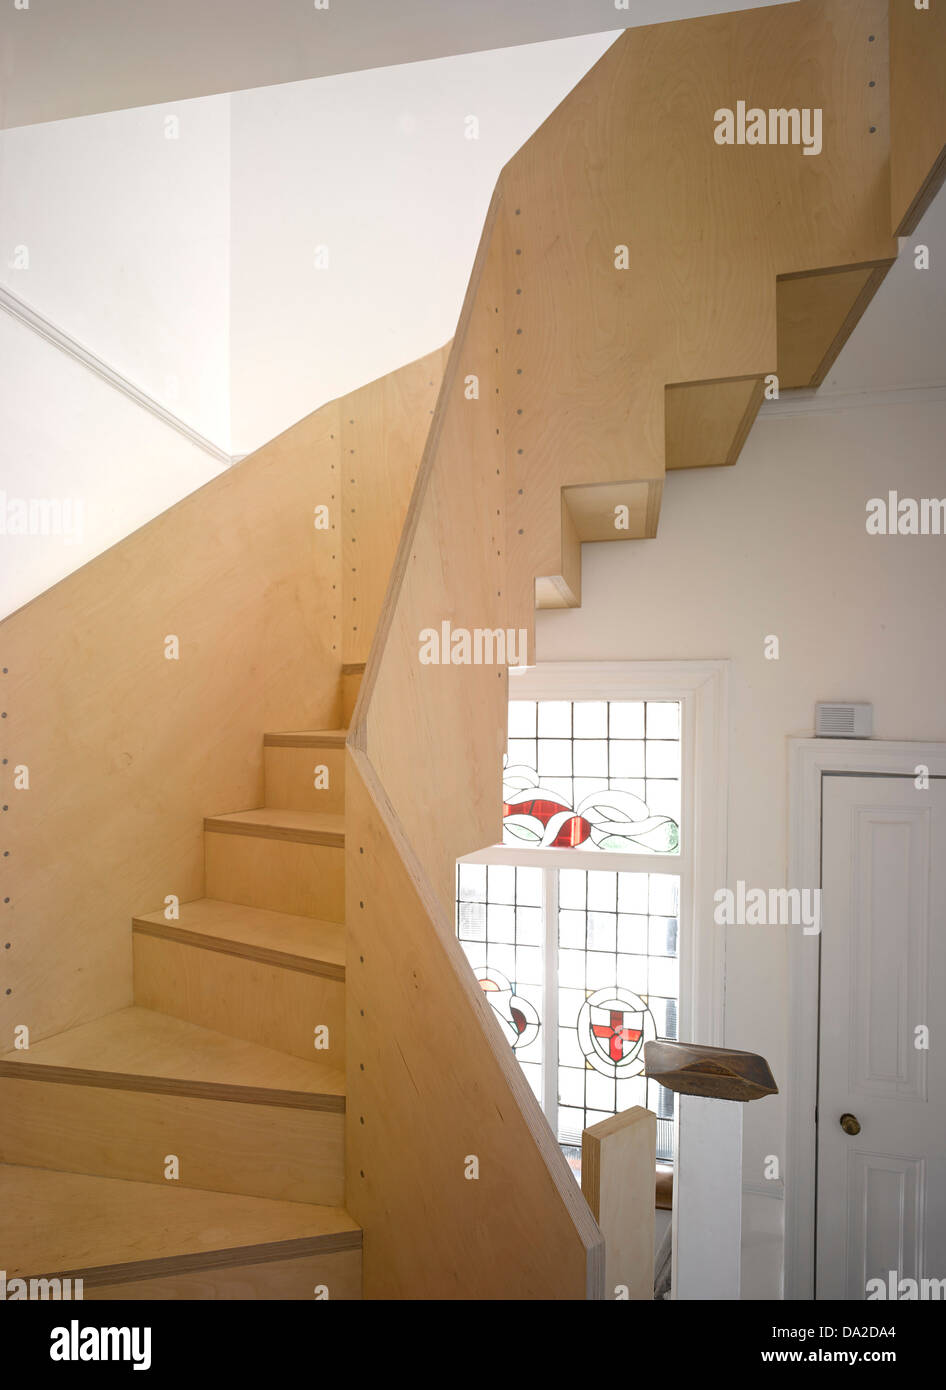 Farrer House, London, United Kingdom. Architect: West Architecture, 2013. Plywood staircase. Stock Photo